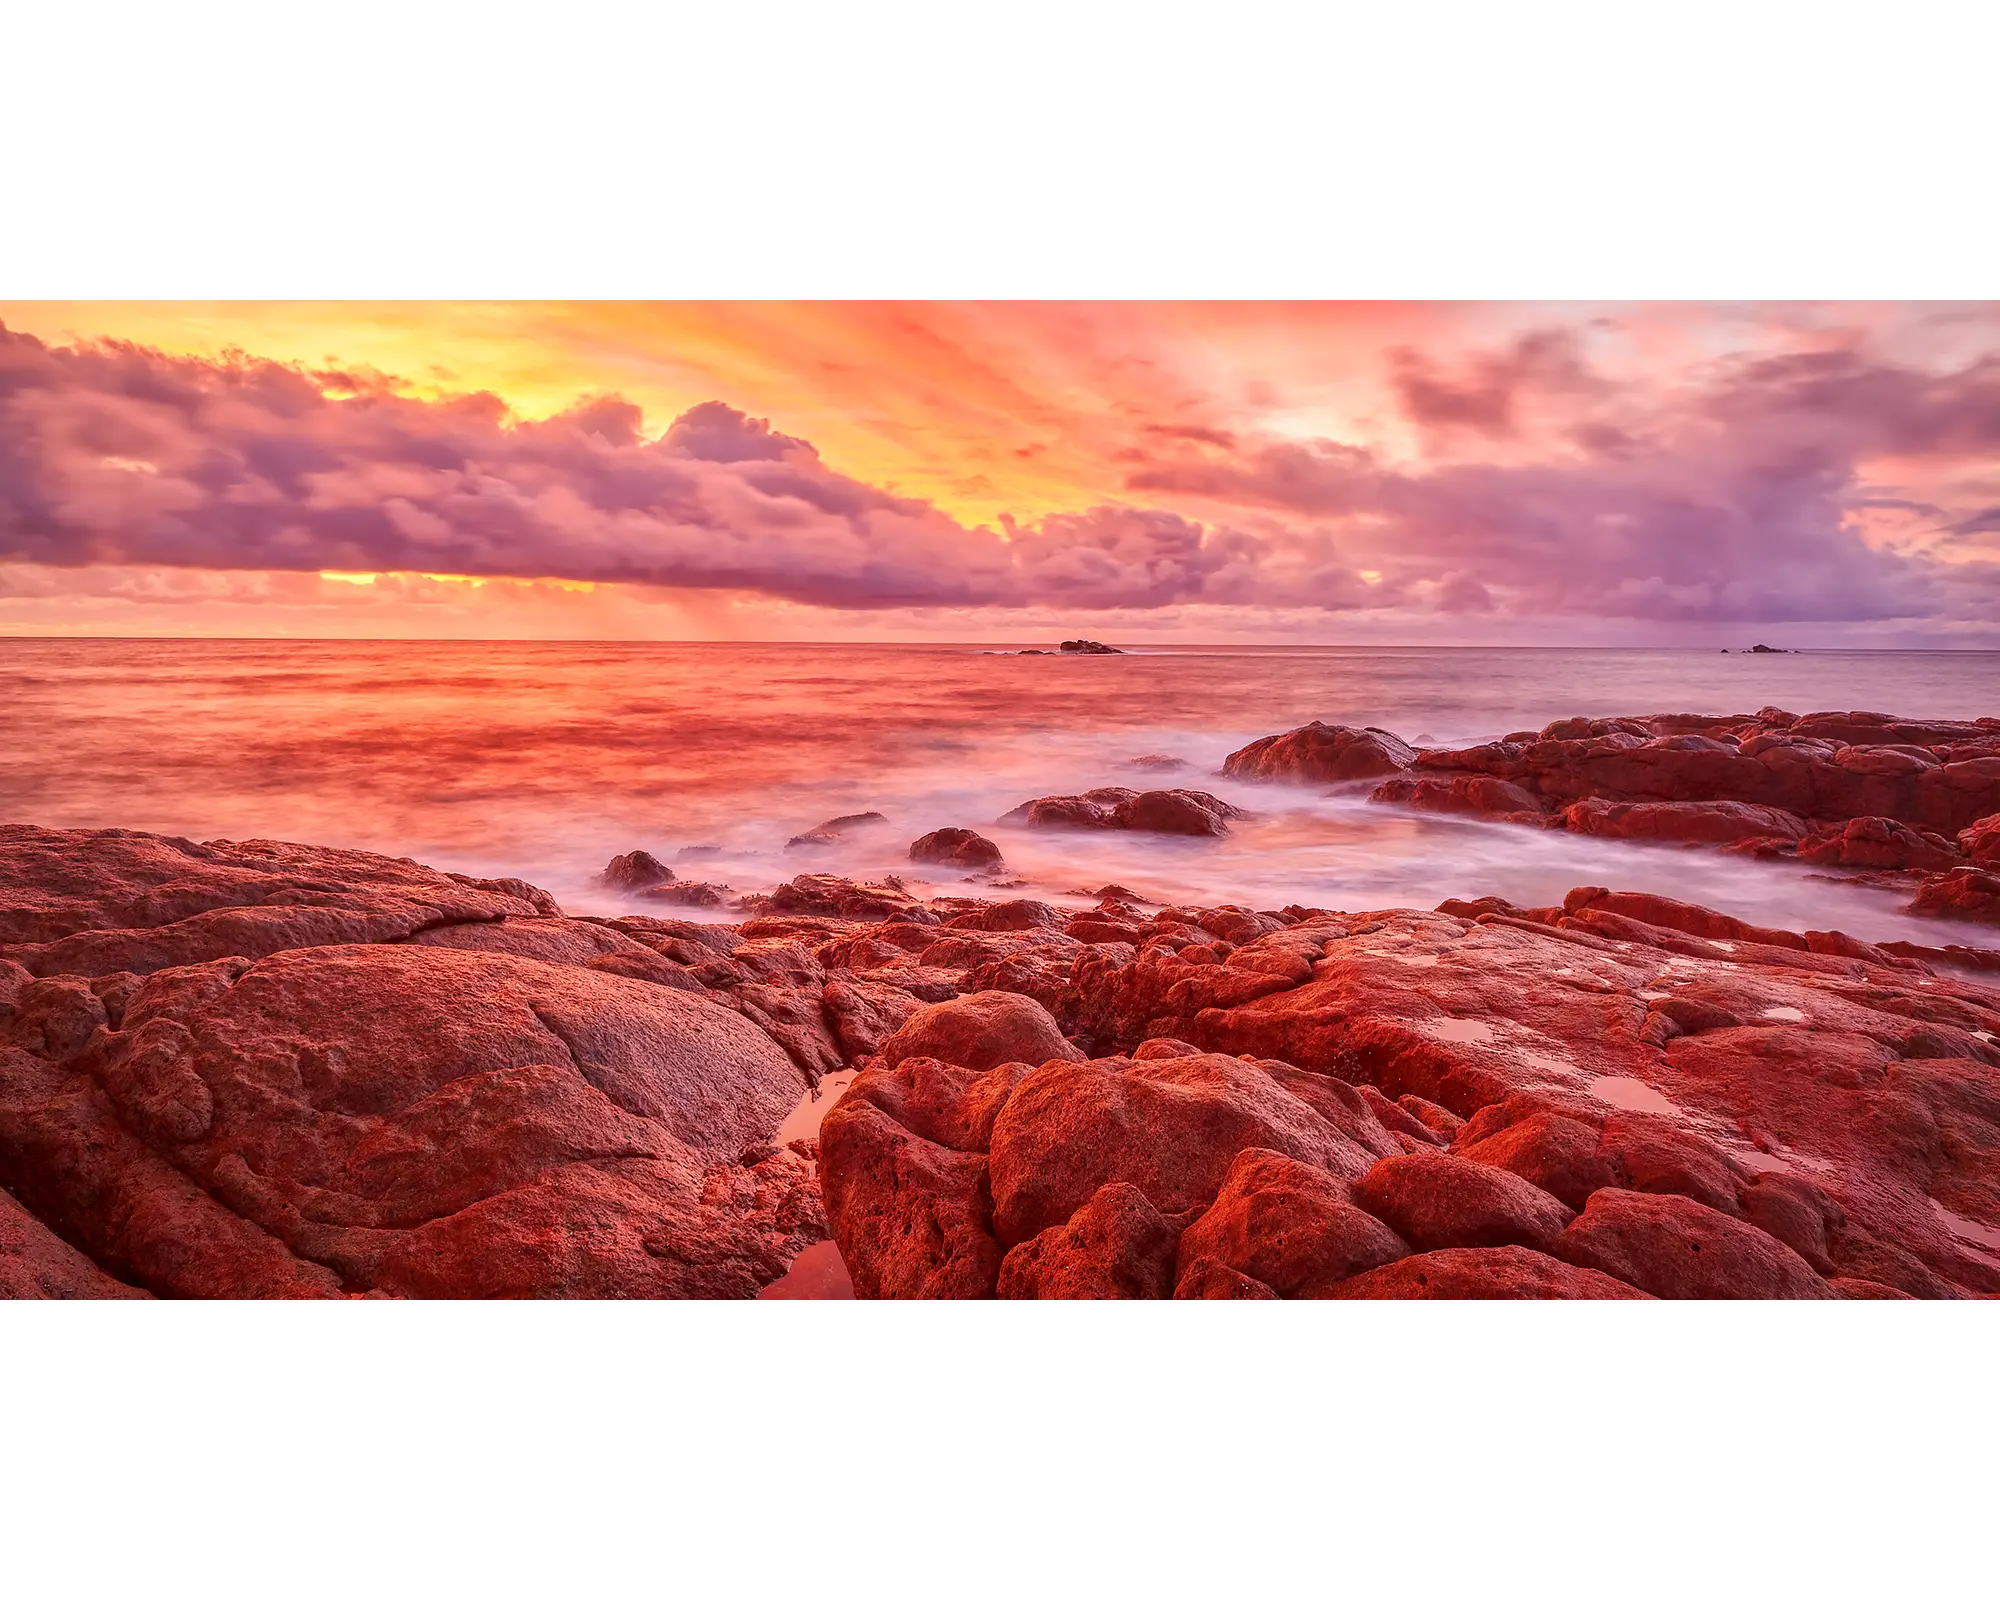 Smiths Sunset. Sunset over Smiths Beach, Western Australia.